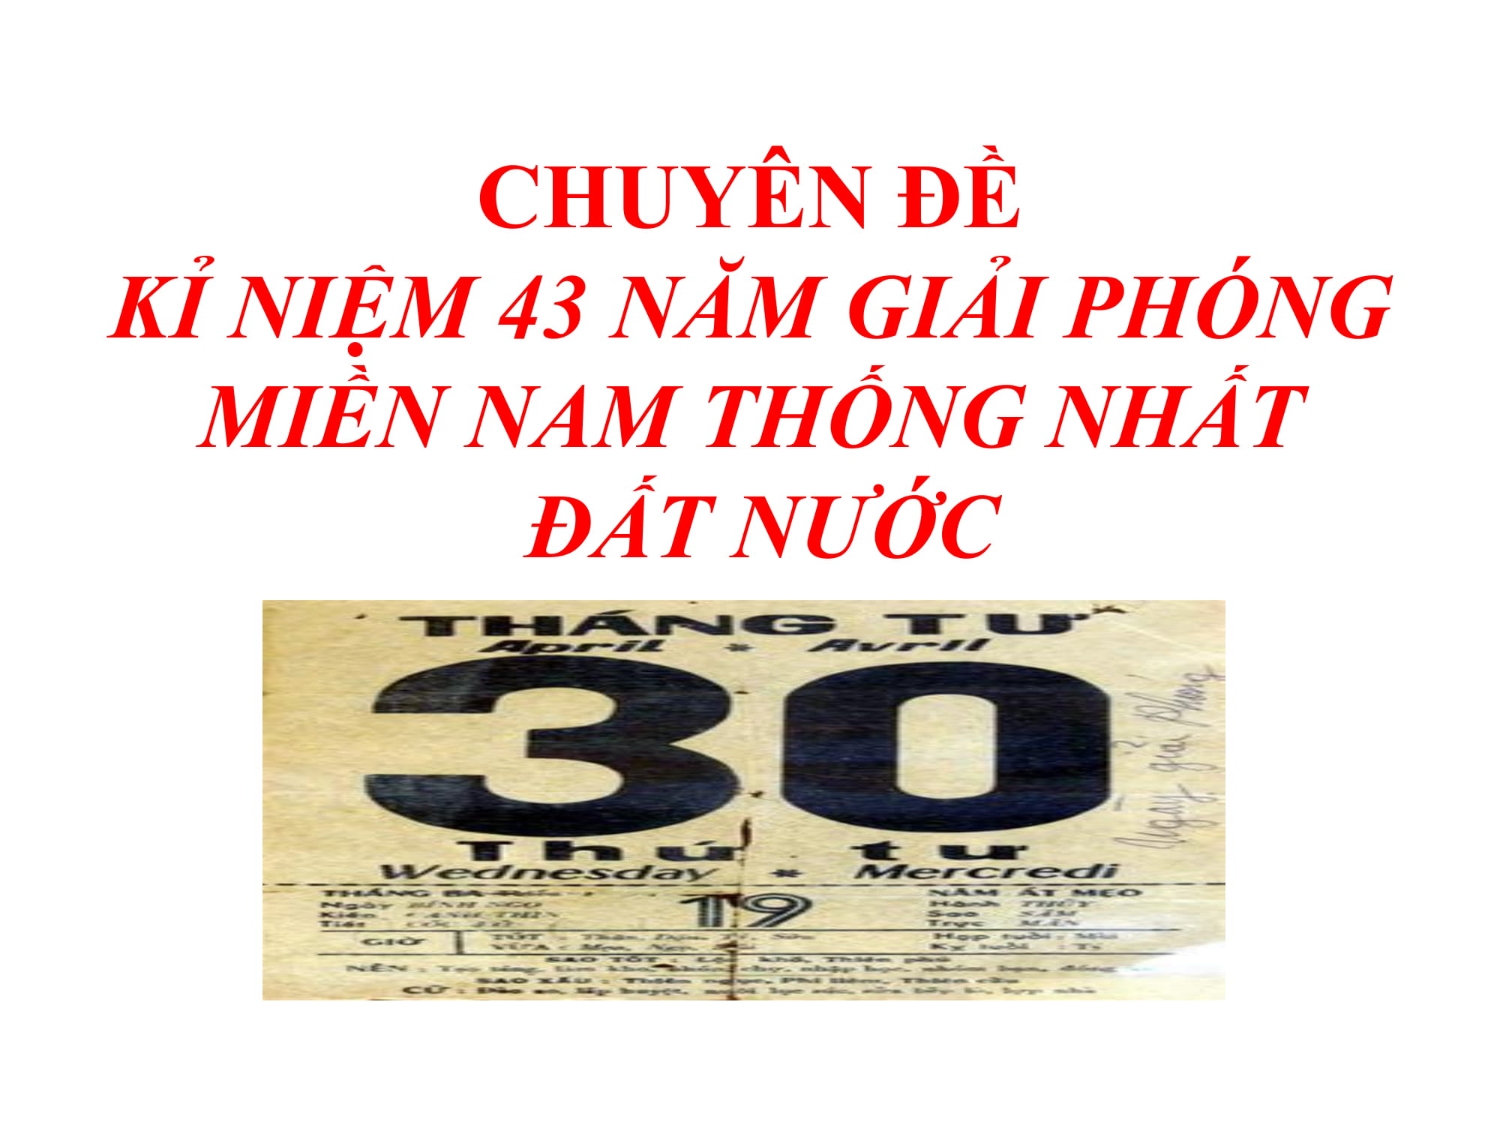 Chuyen de Ki niem 43 nam Thong nhat dat nuoc 01